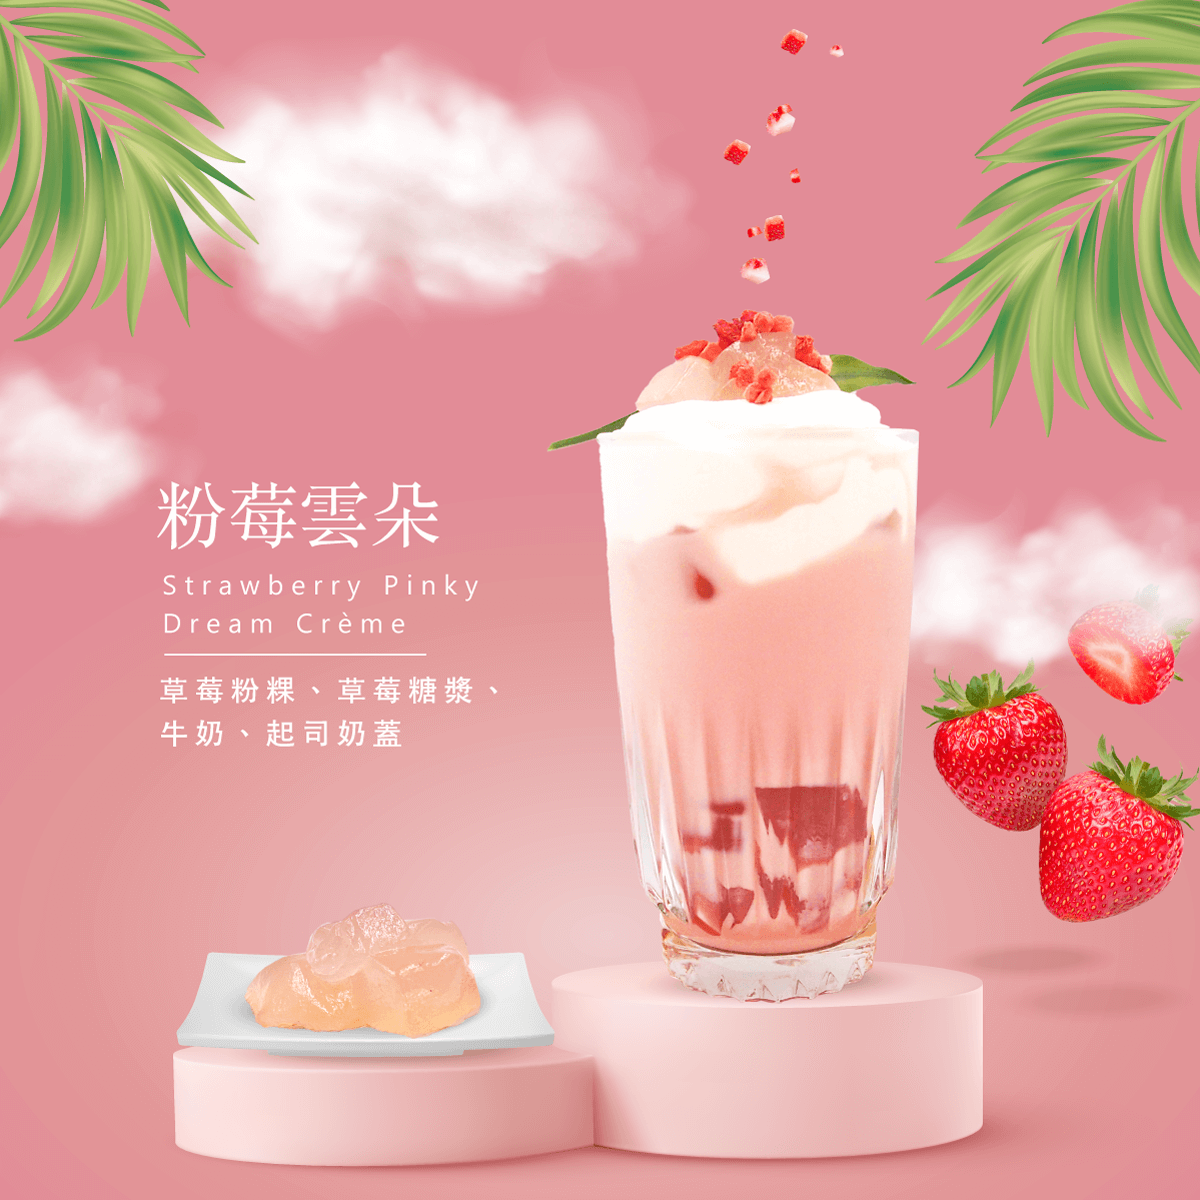 Strawberry Pinky Dream Crème